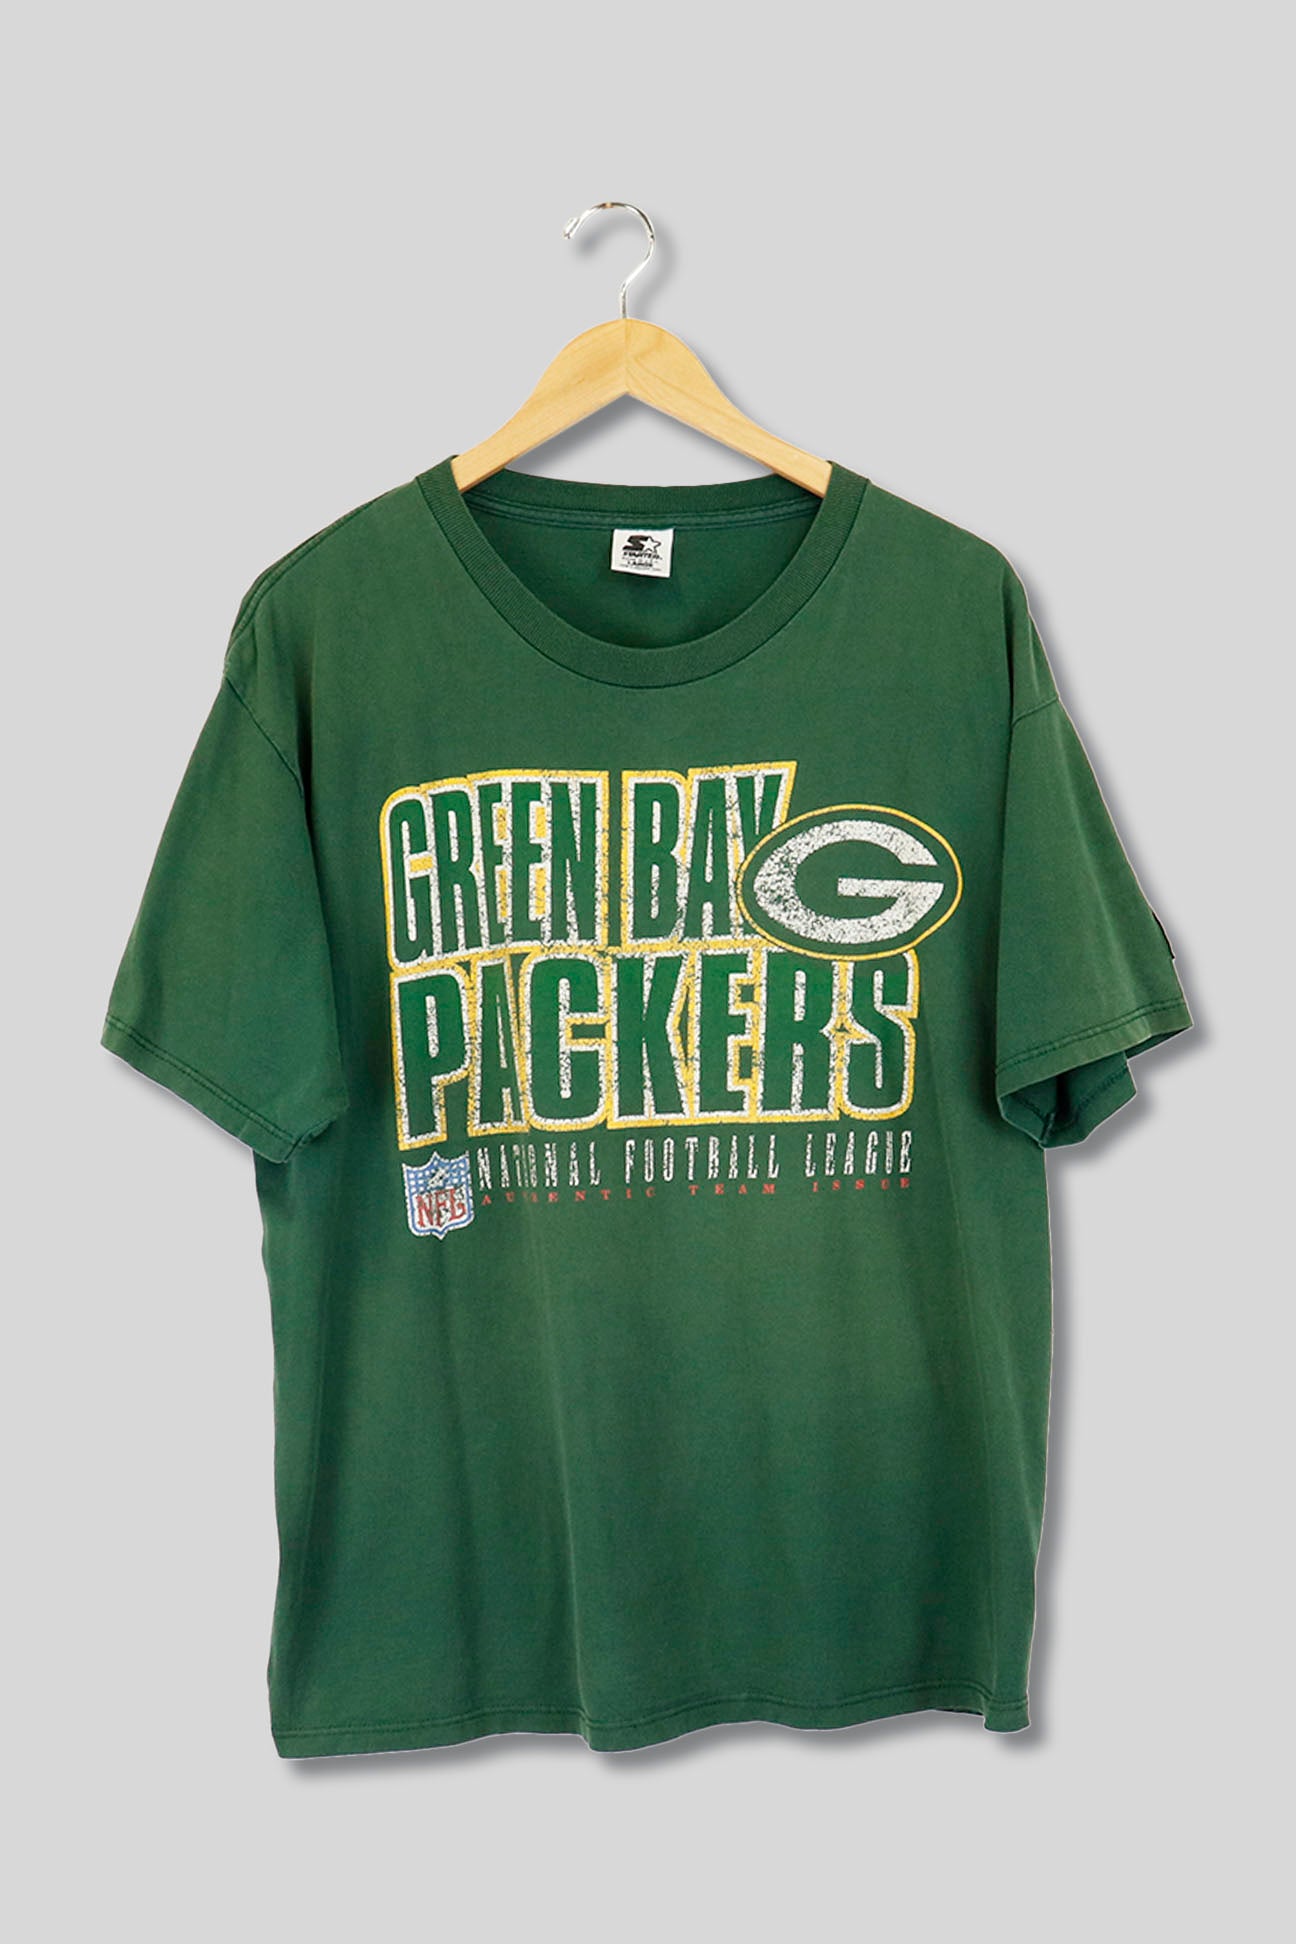 vintage green bay packers shirts